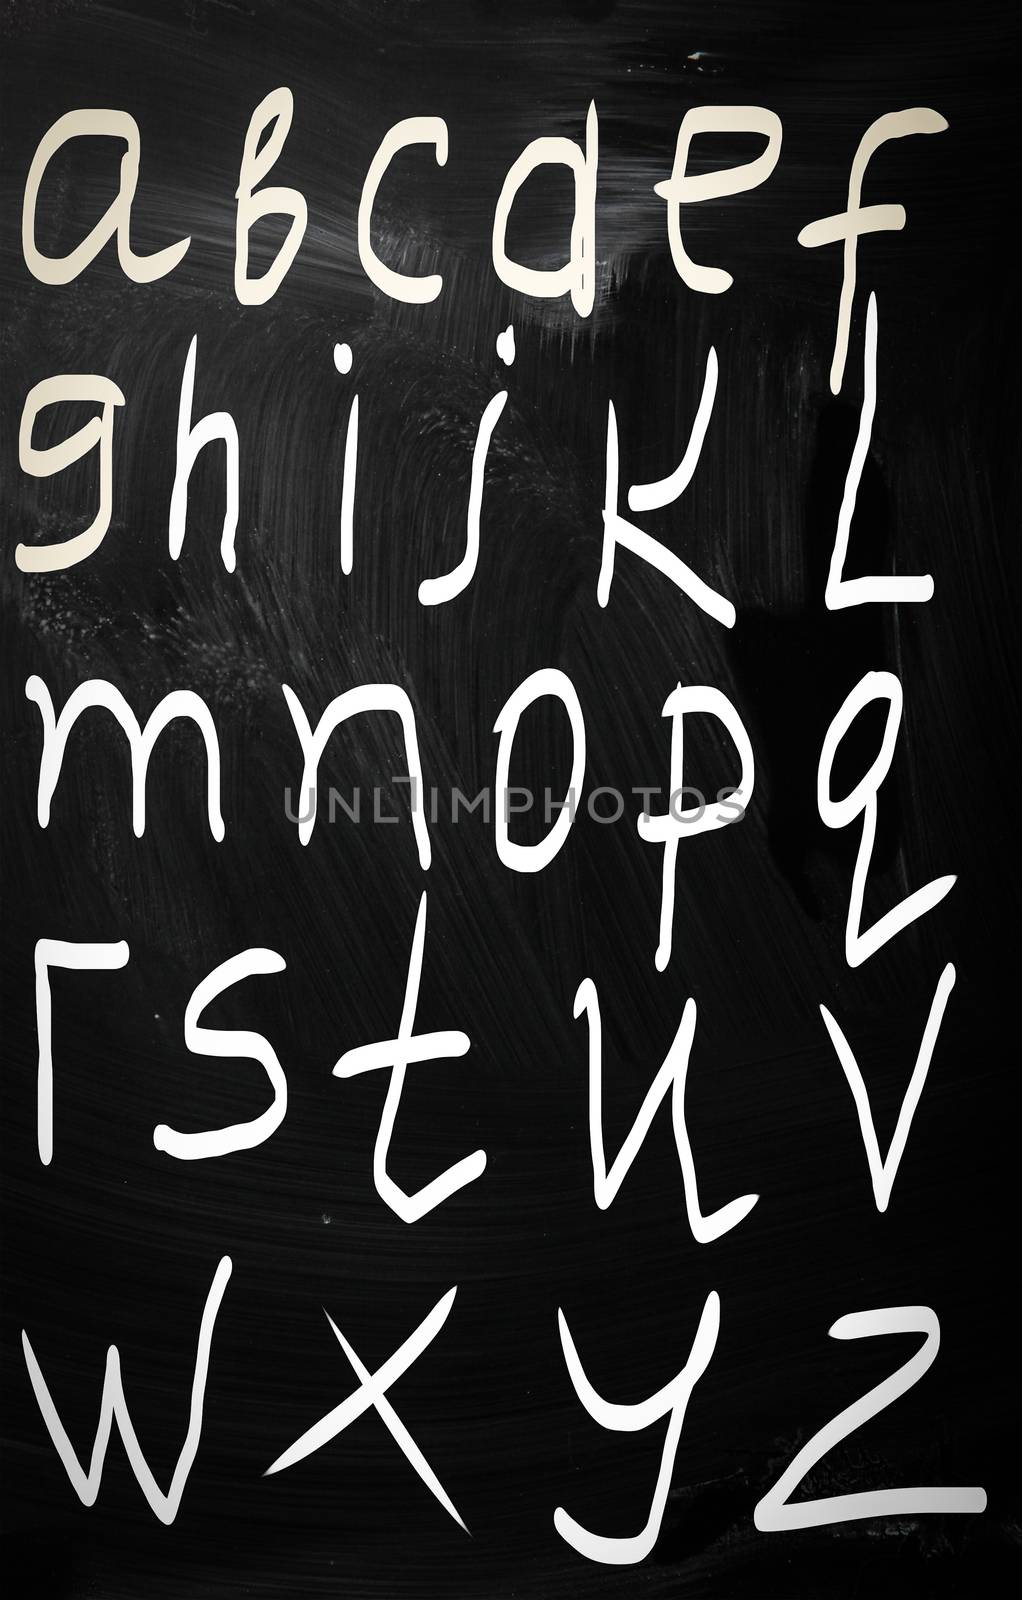 Complete english alphabet handwritten with white chalk on a blac by KrasimiraNevenova